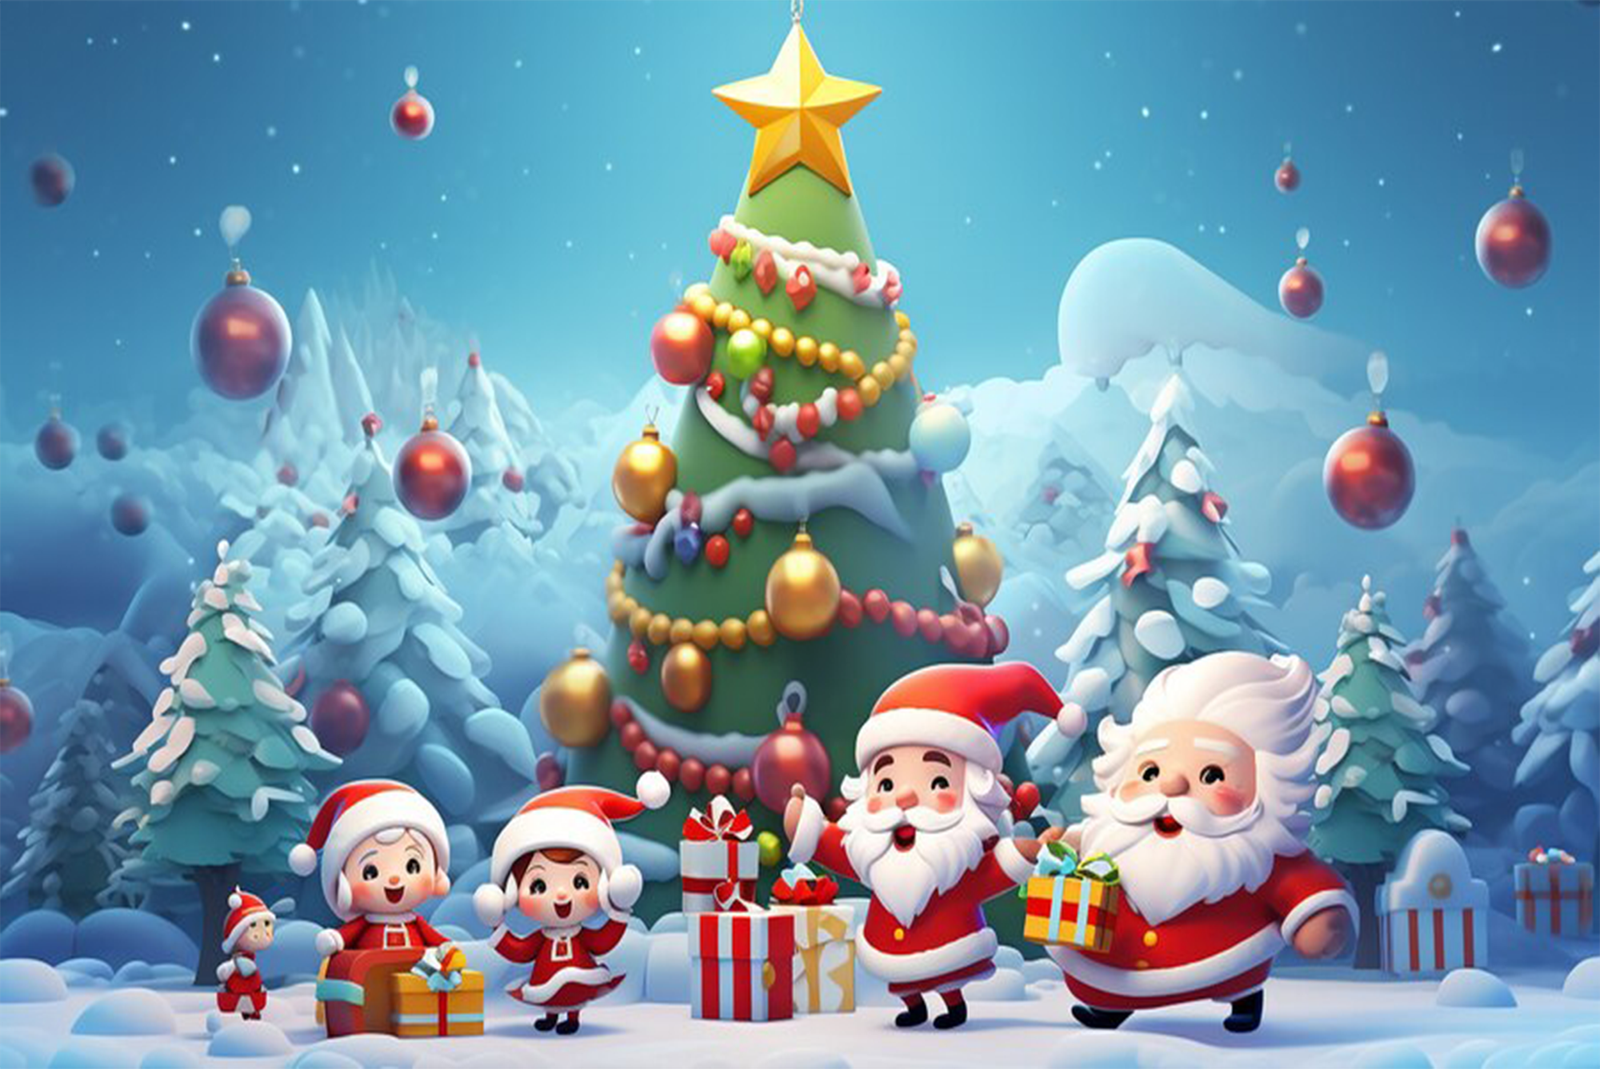 Christmas Celebration in December